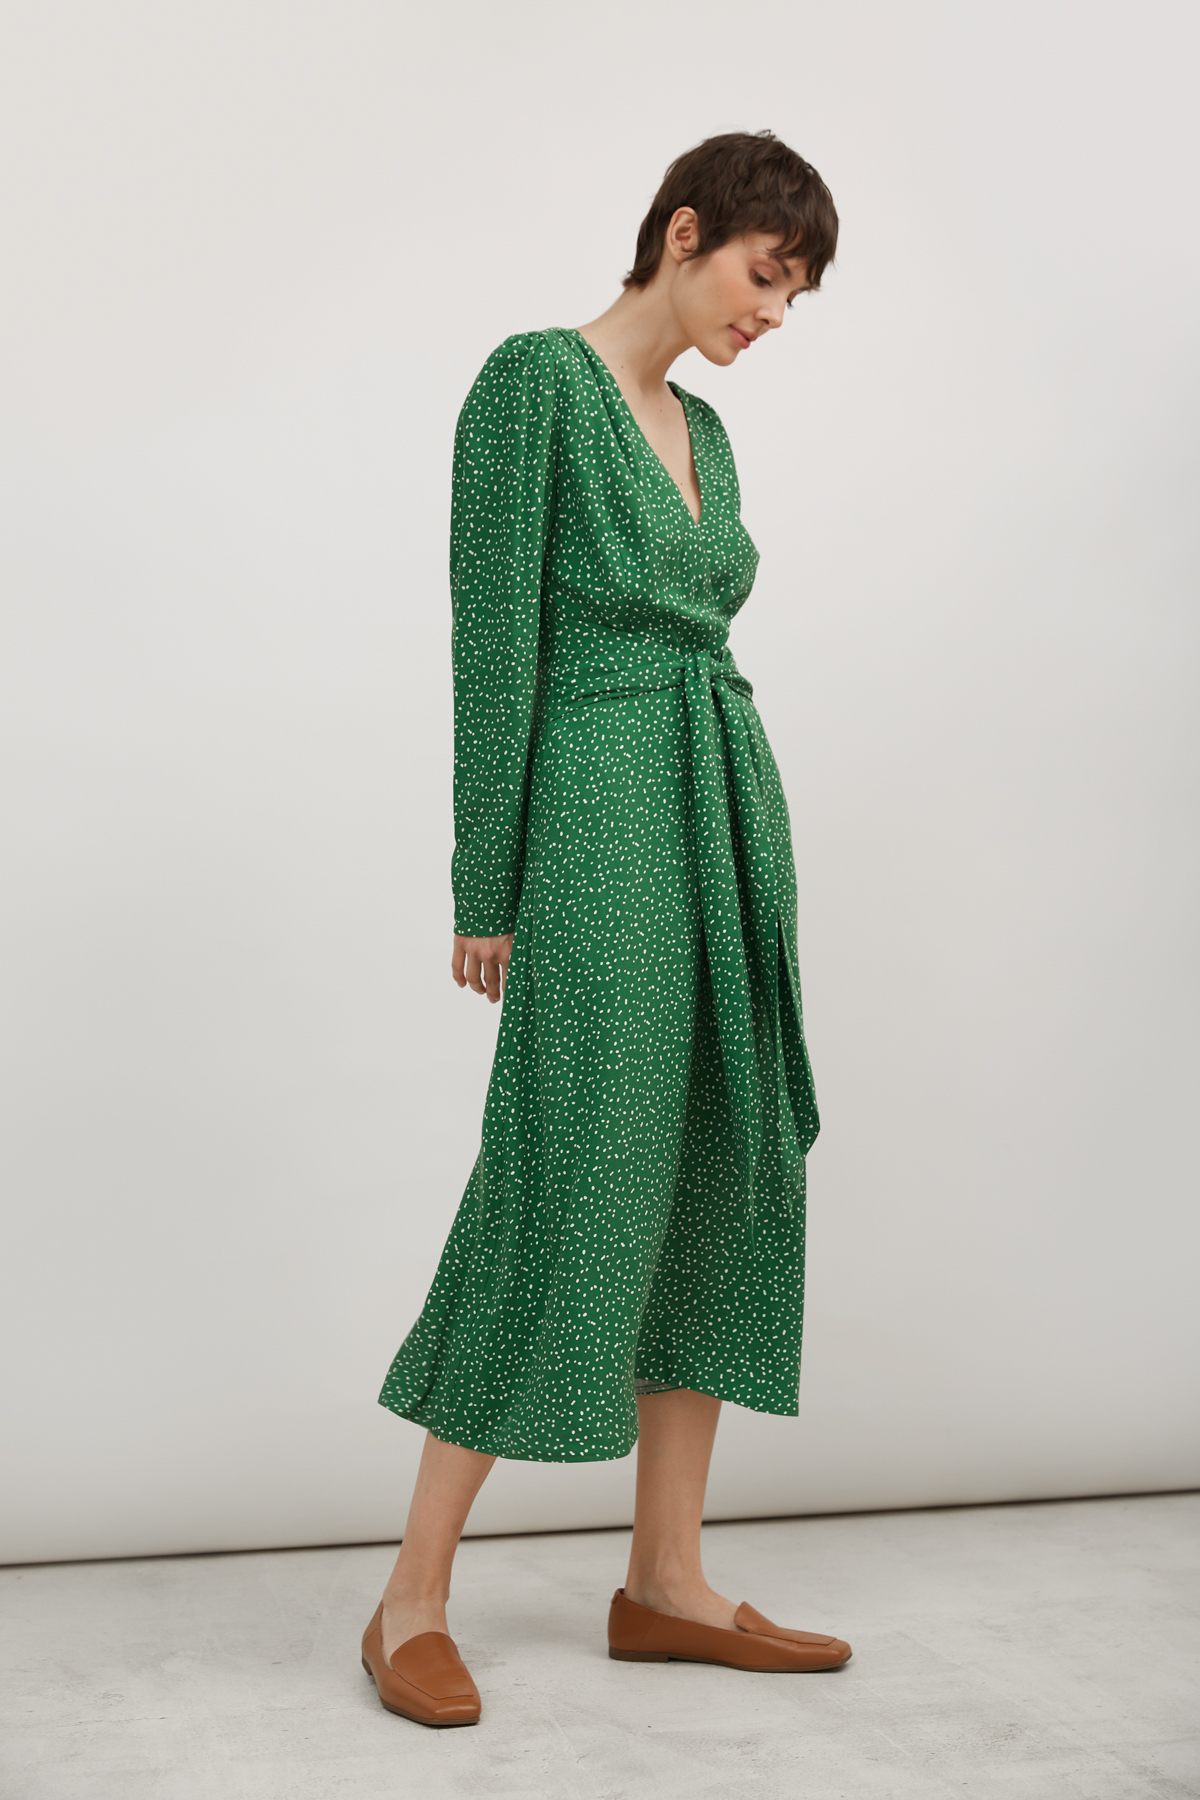 Green midi dress with viscose in white drops print, photo 1